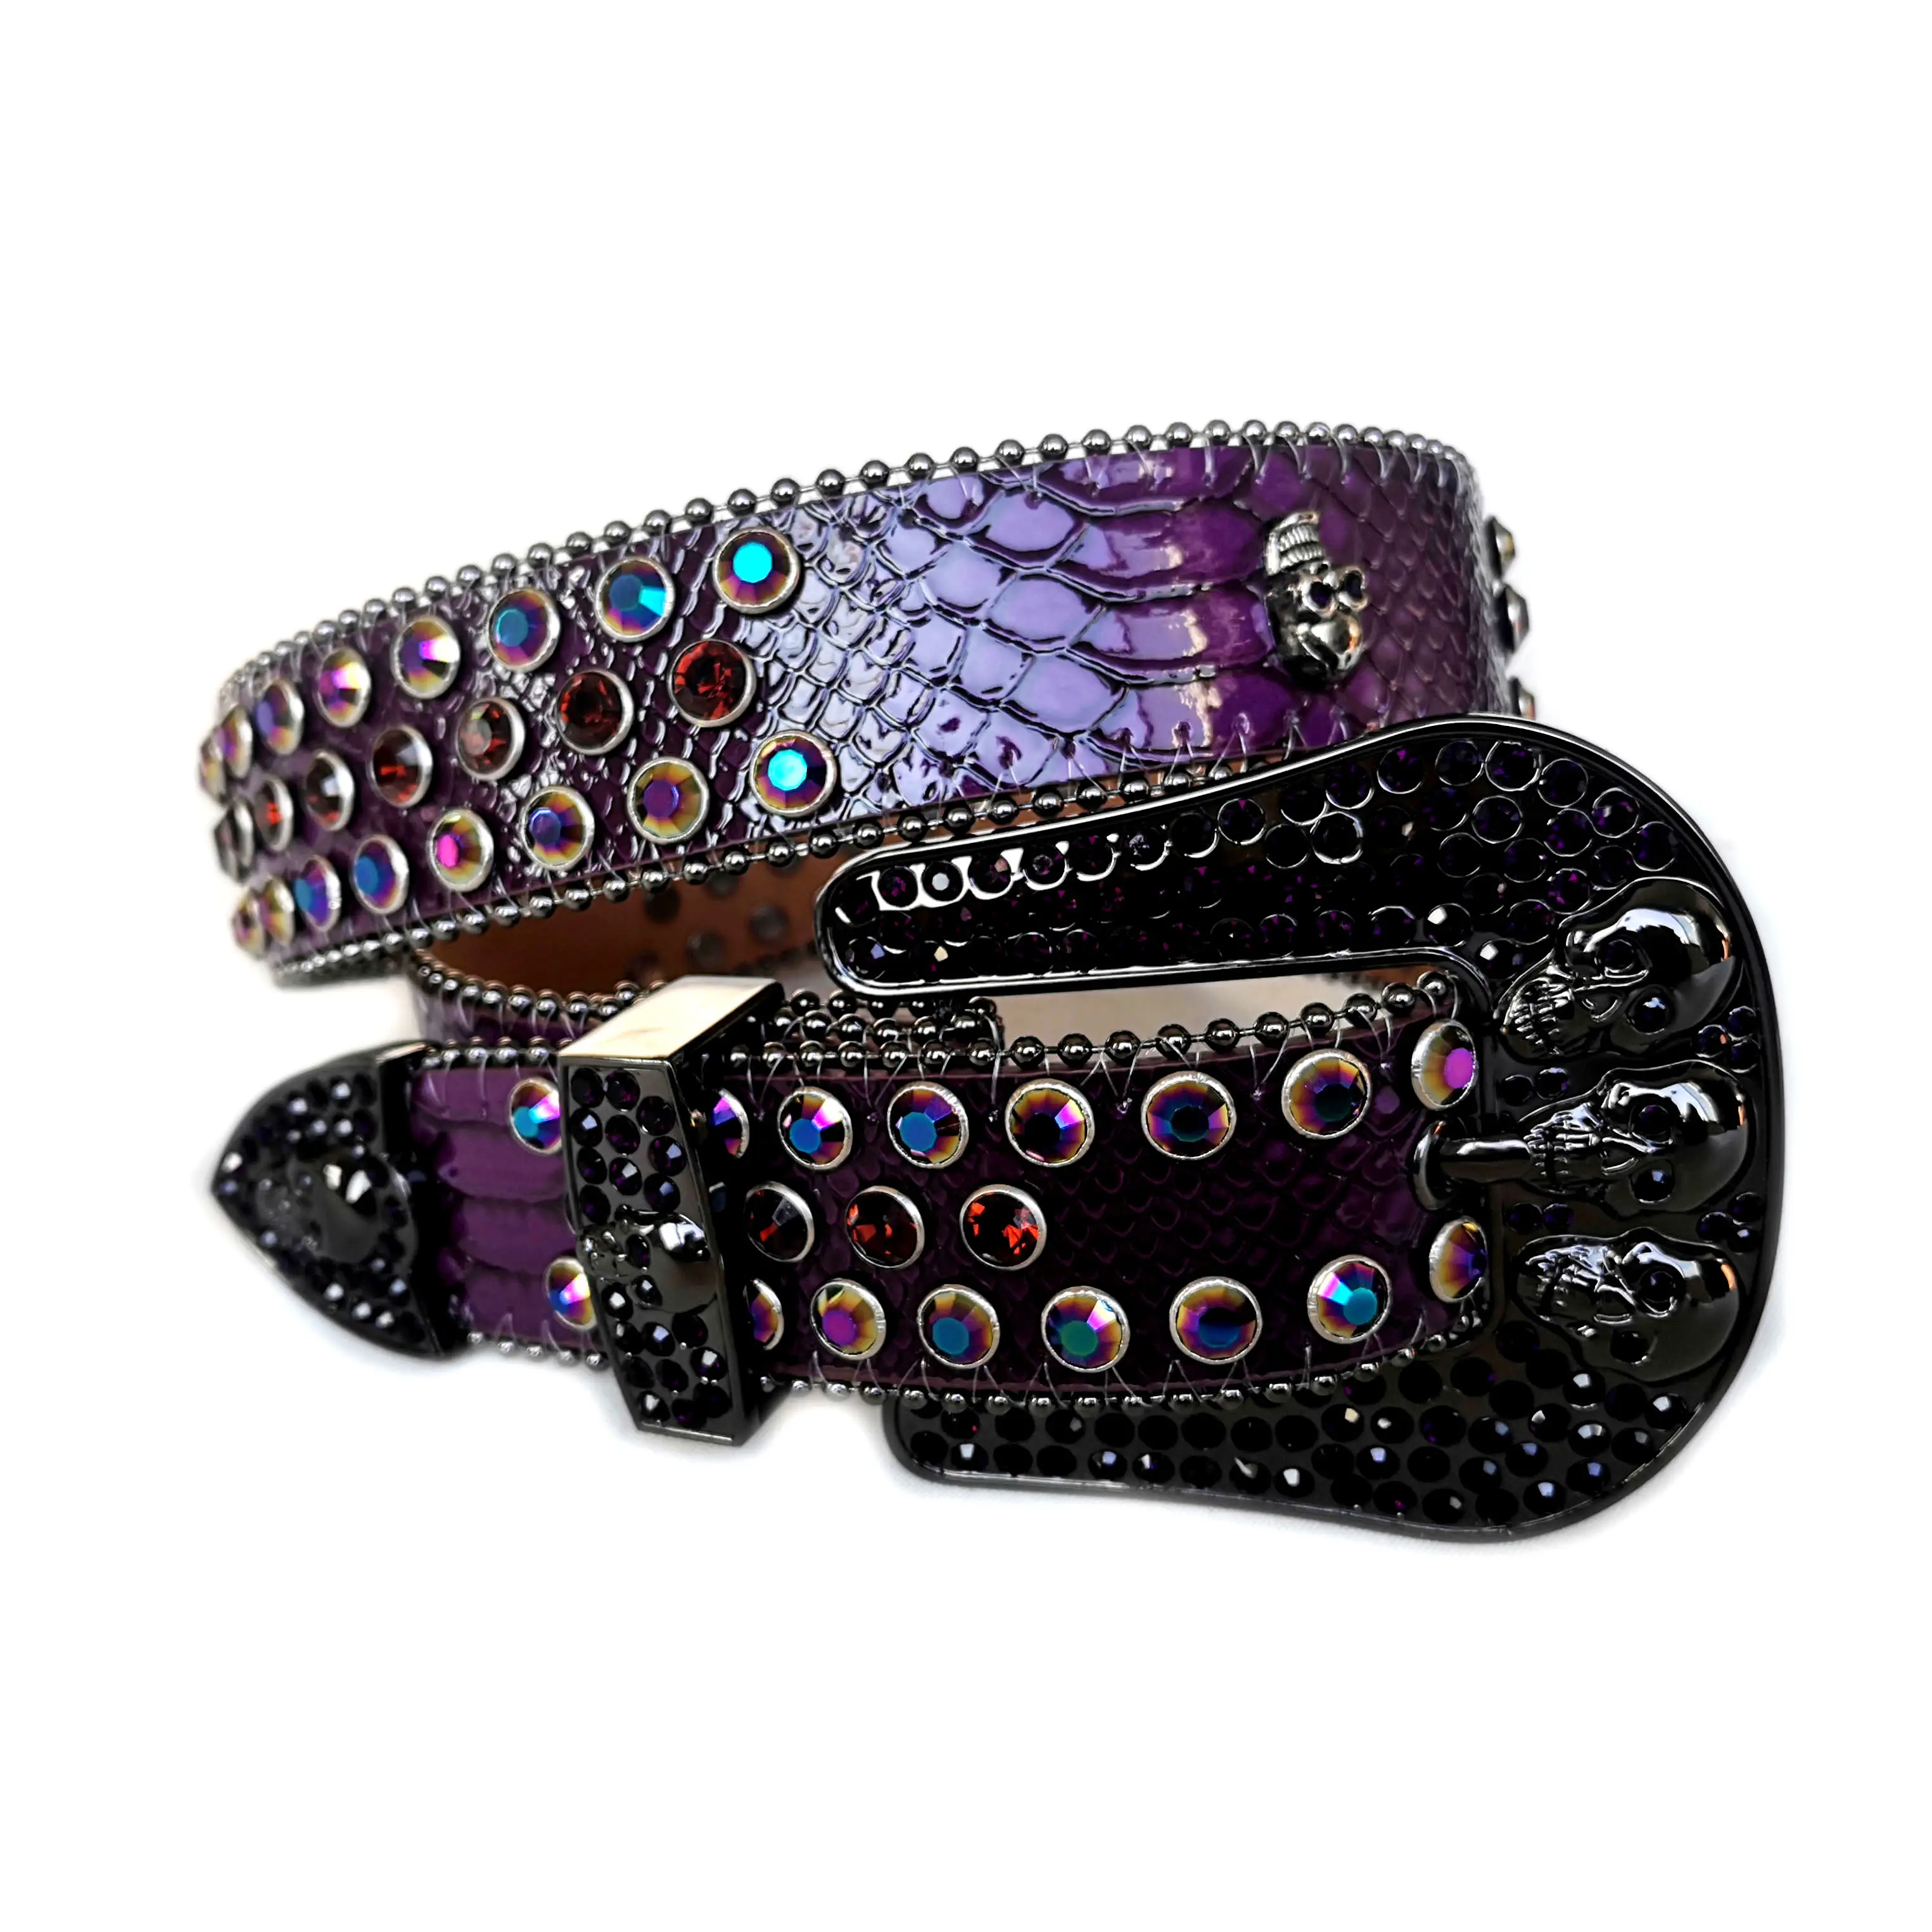 Hotsale famous brands cinturones woman belt PU Leather Black Snake Skull Purple Lilac Crystal Rhinestone Belt